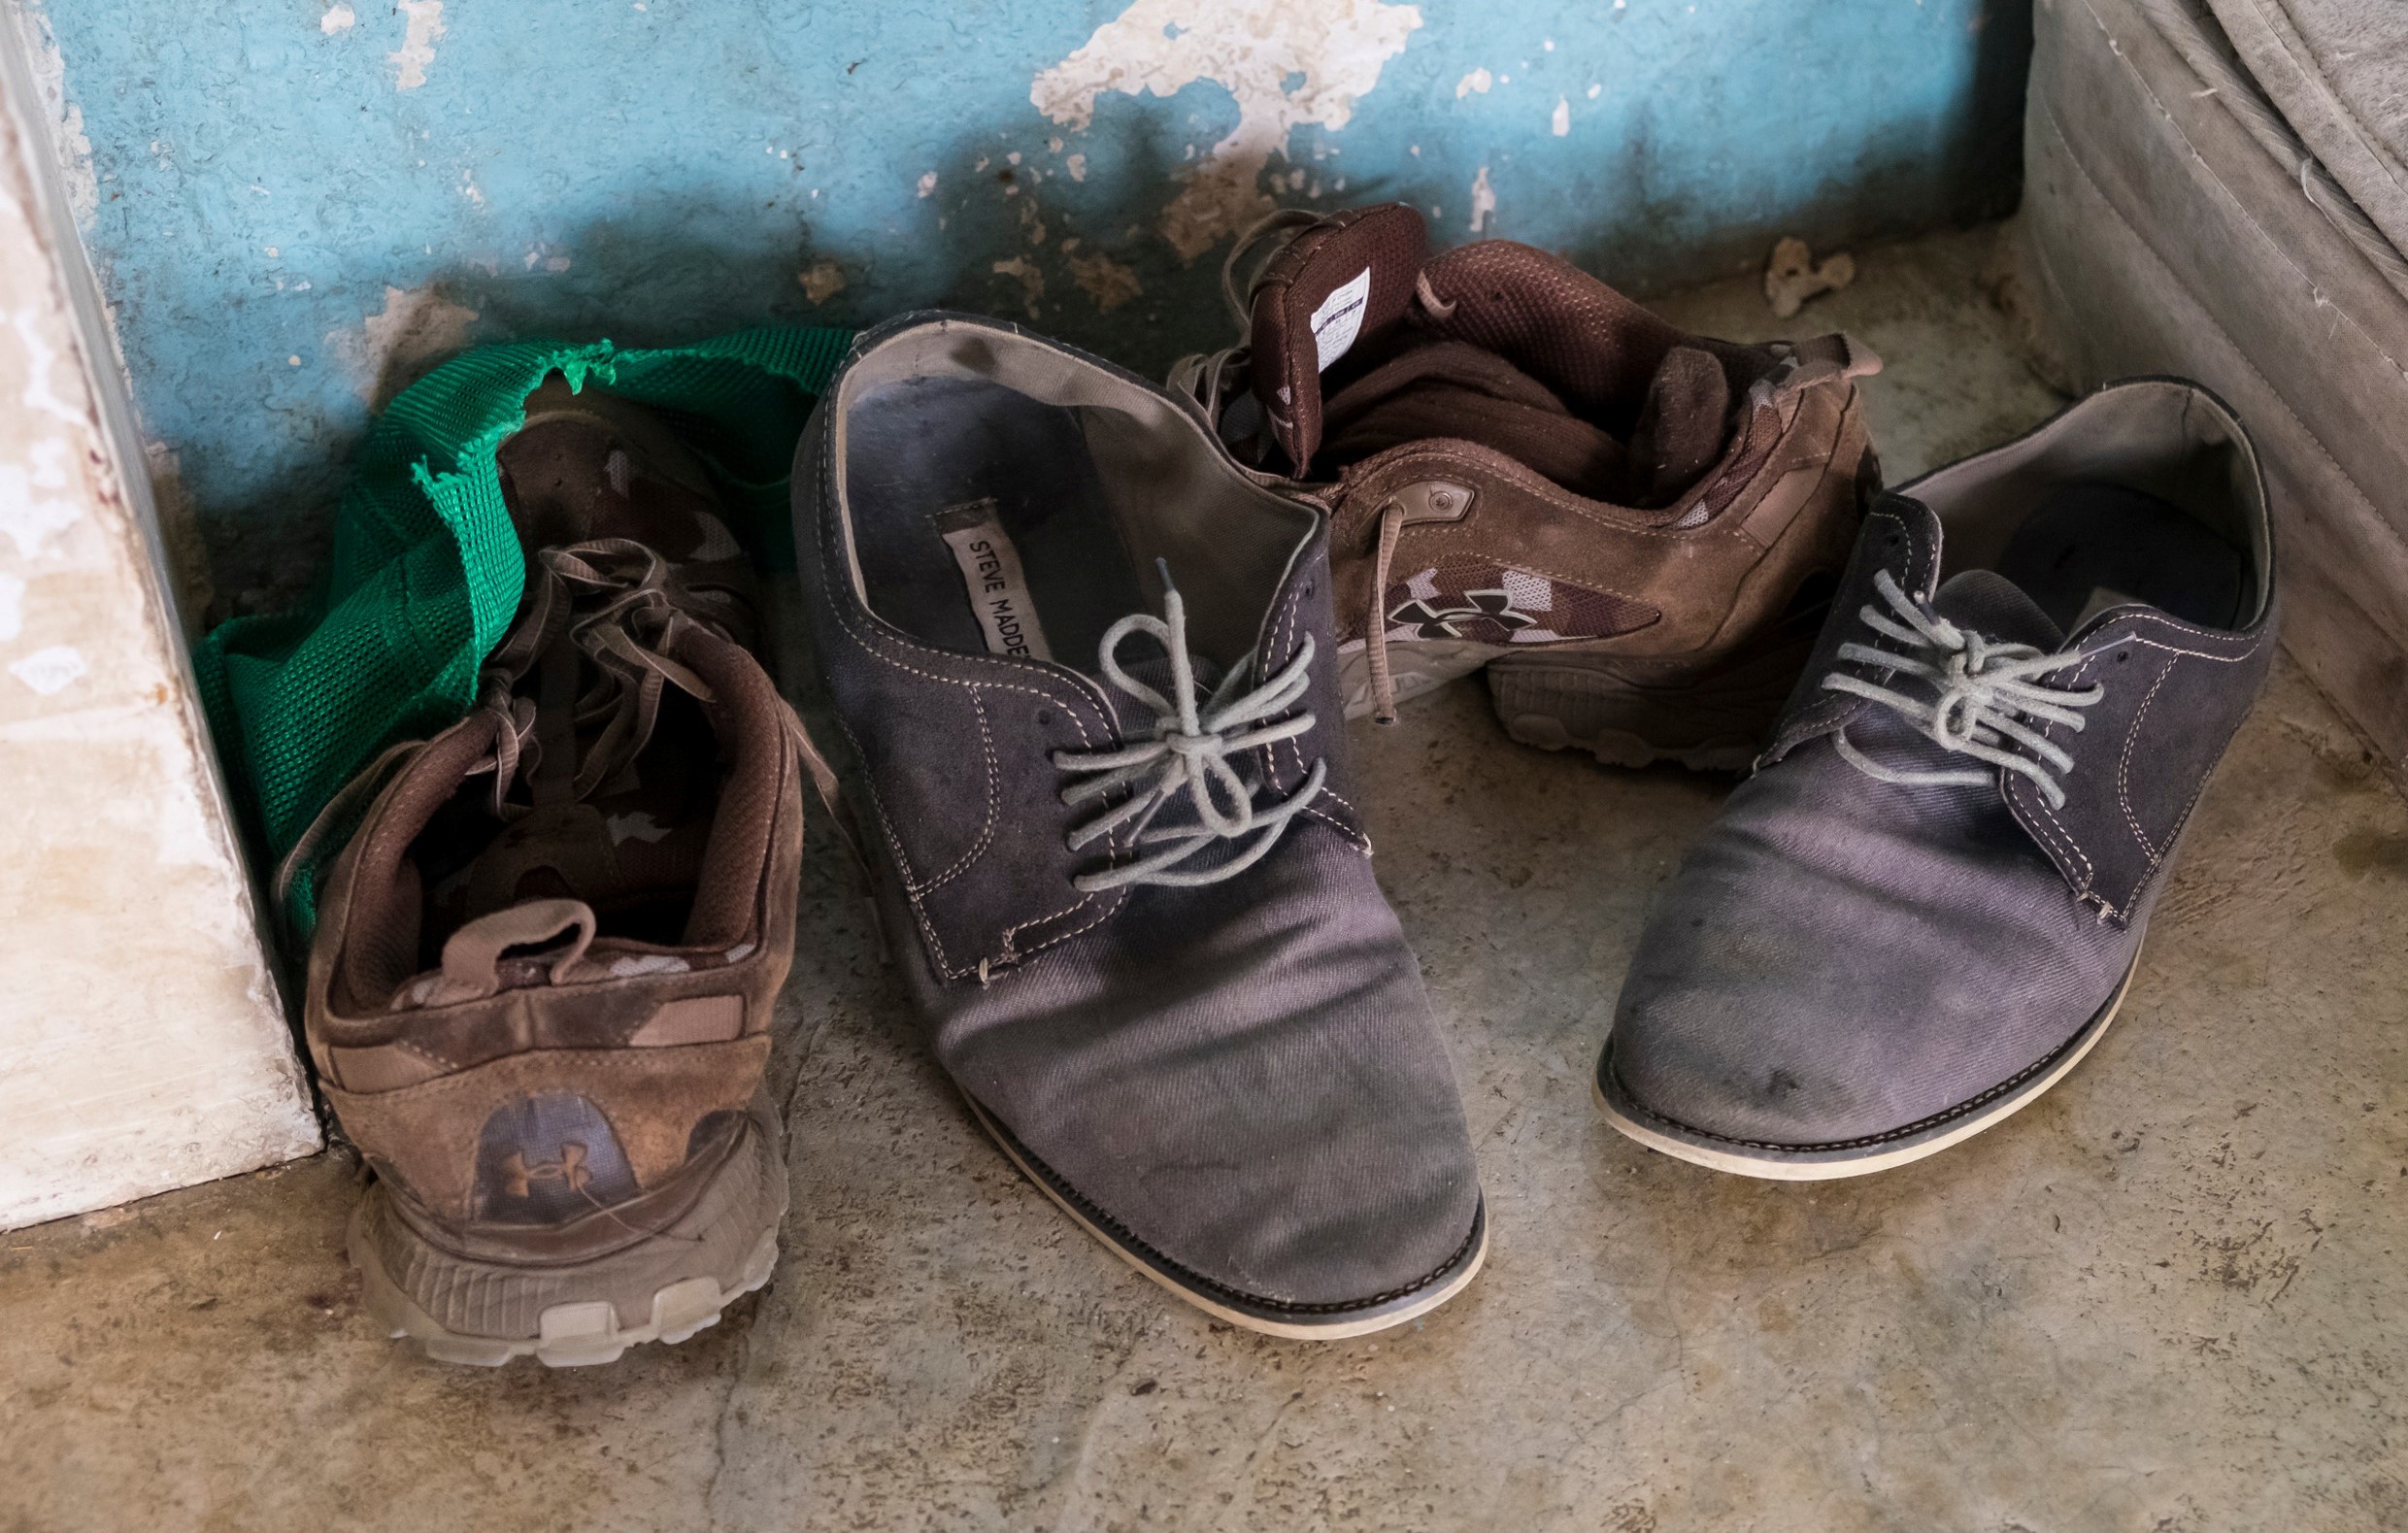 Migranten USA Mexiko Schuhe Herberge